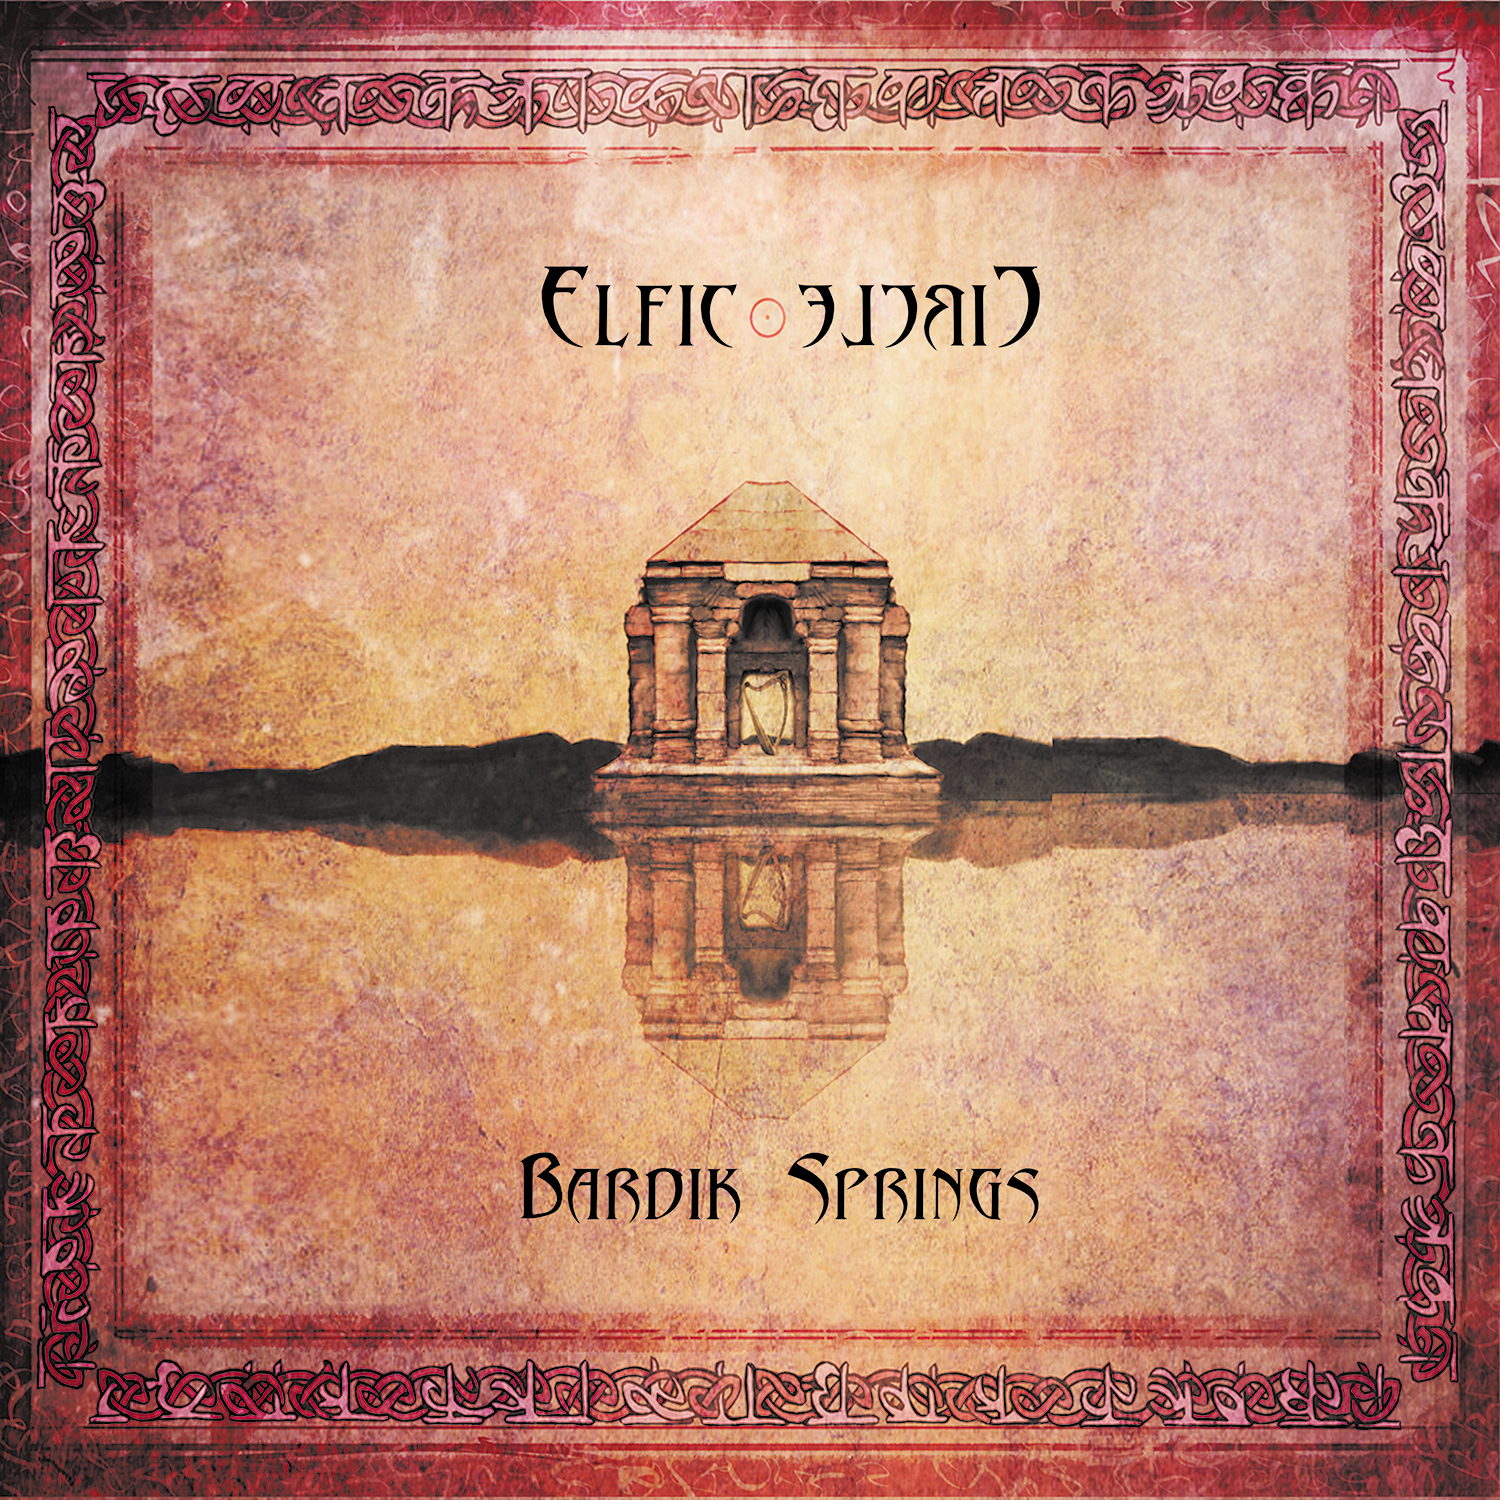 Elfic Circle – Bardik Springs